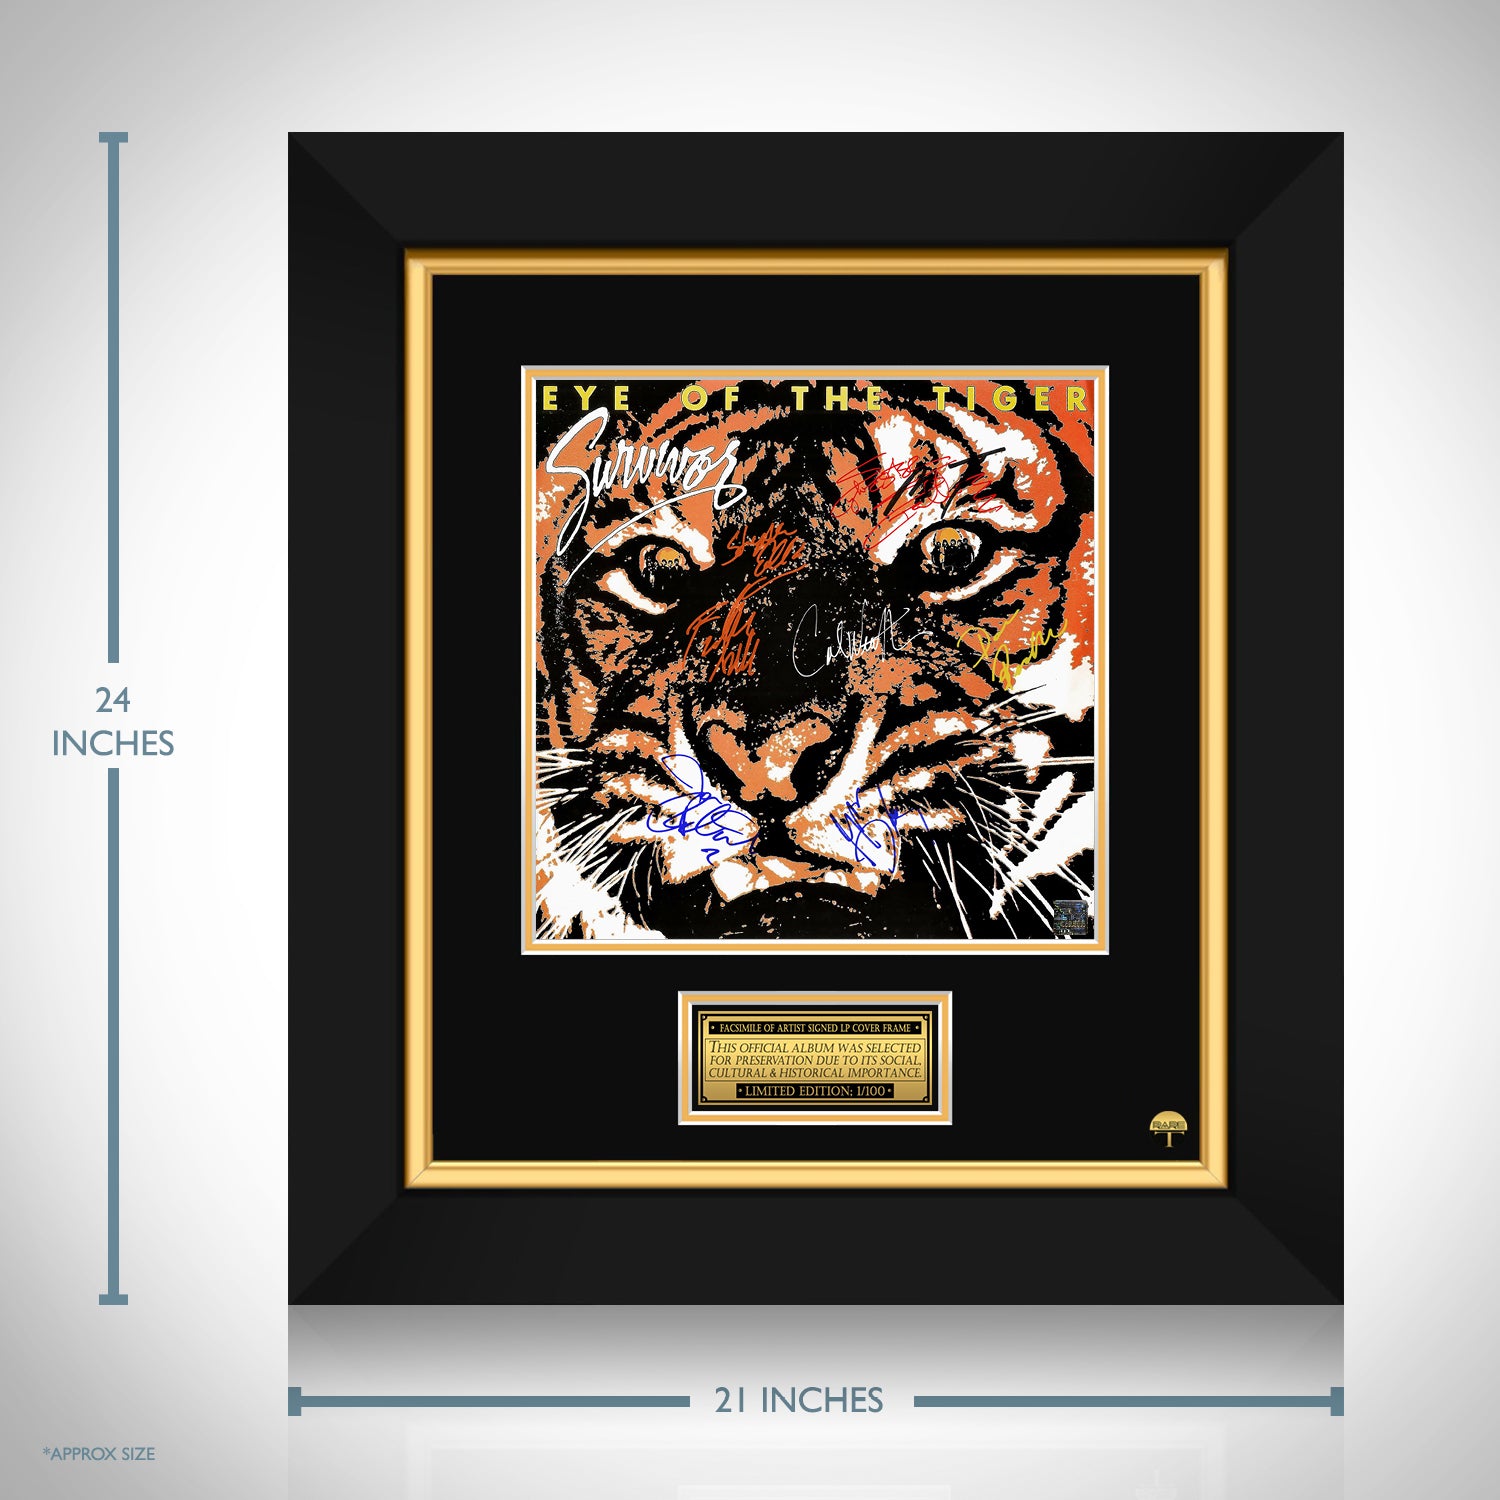 Survivor, Eye Of The Tiger, Cassette (Album)